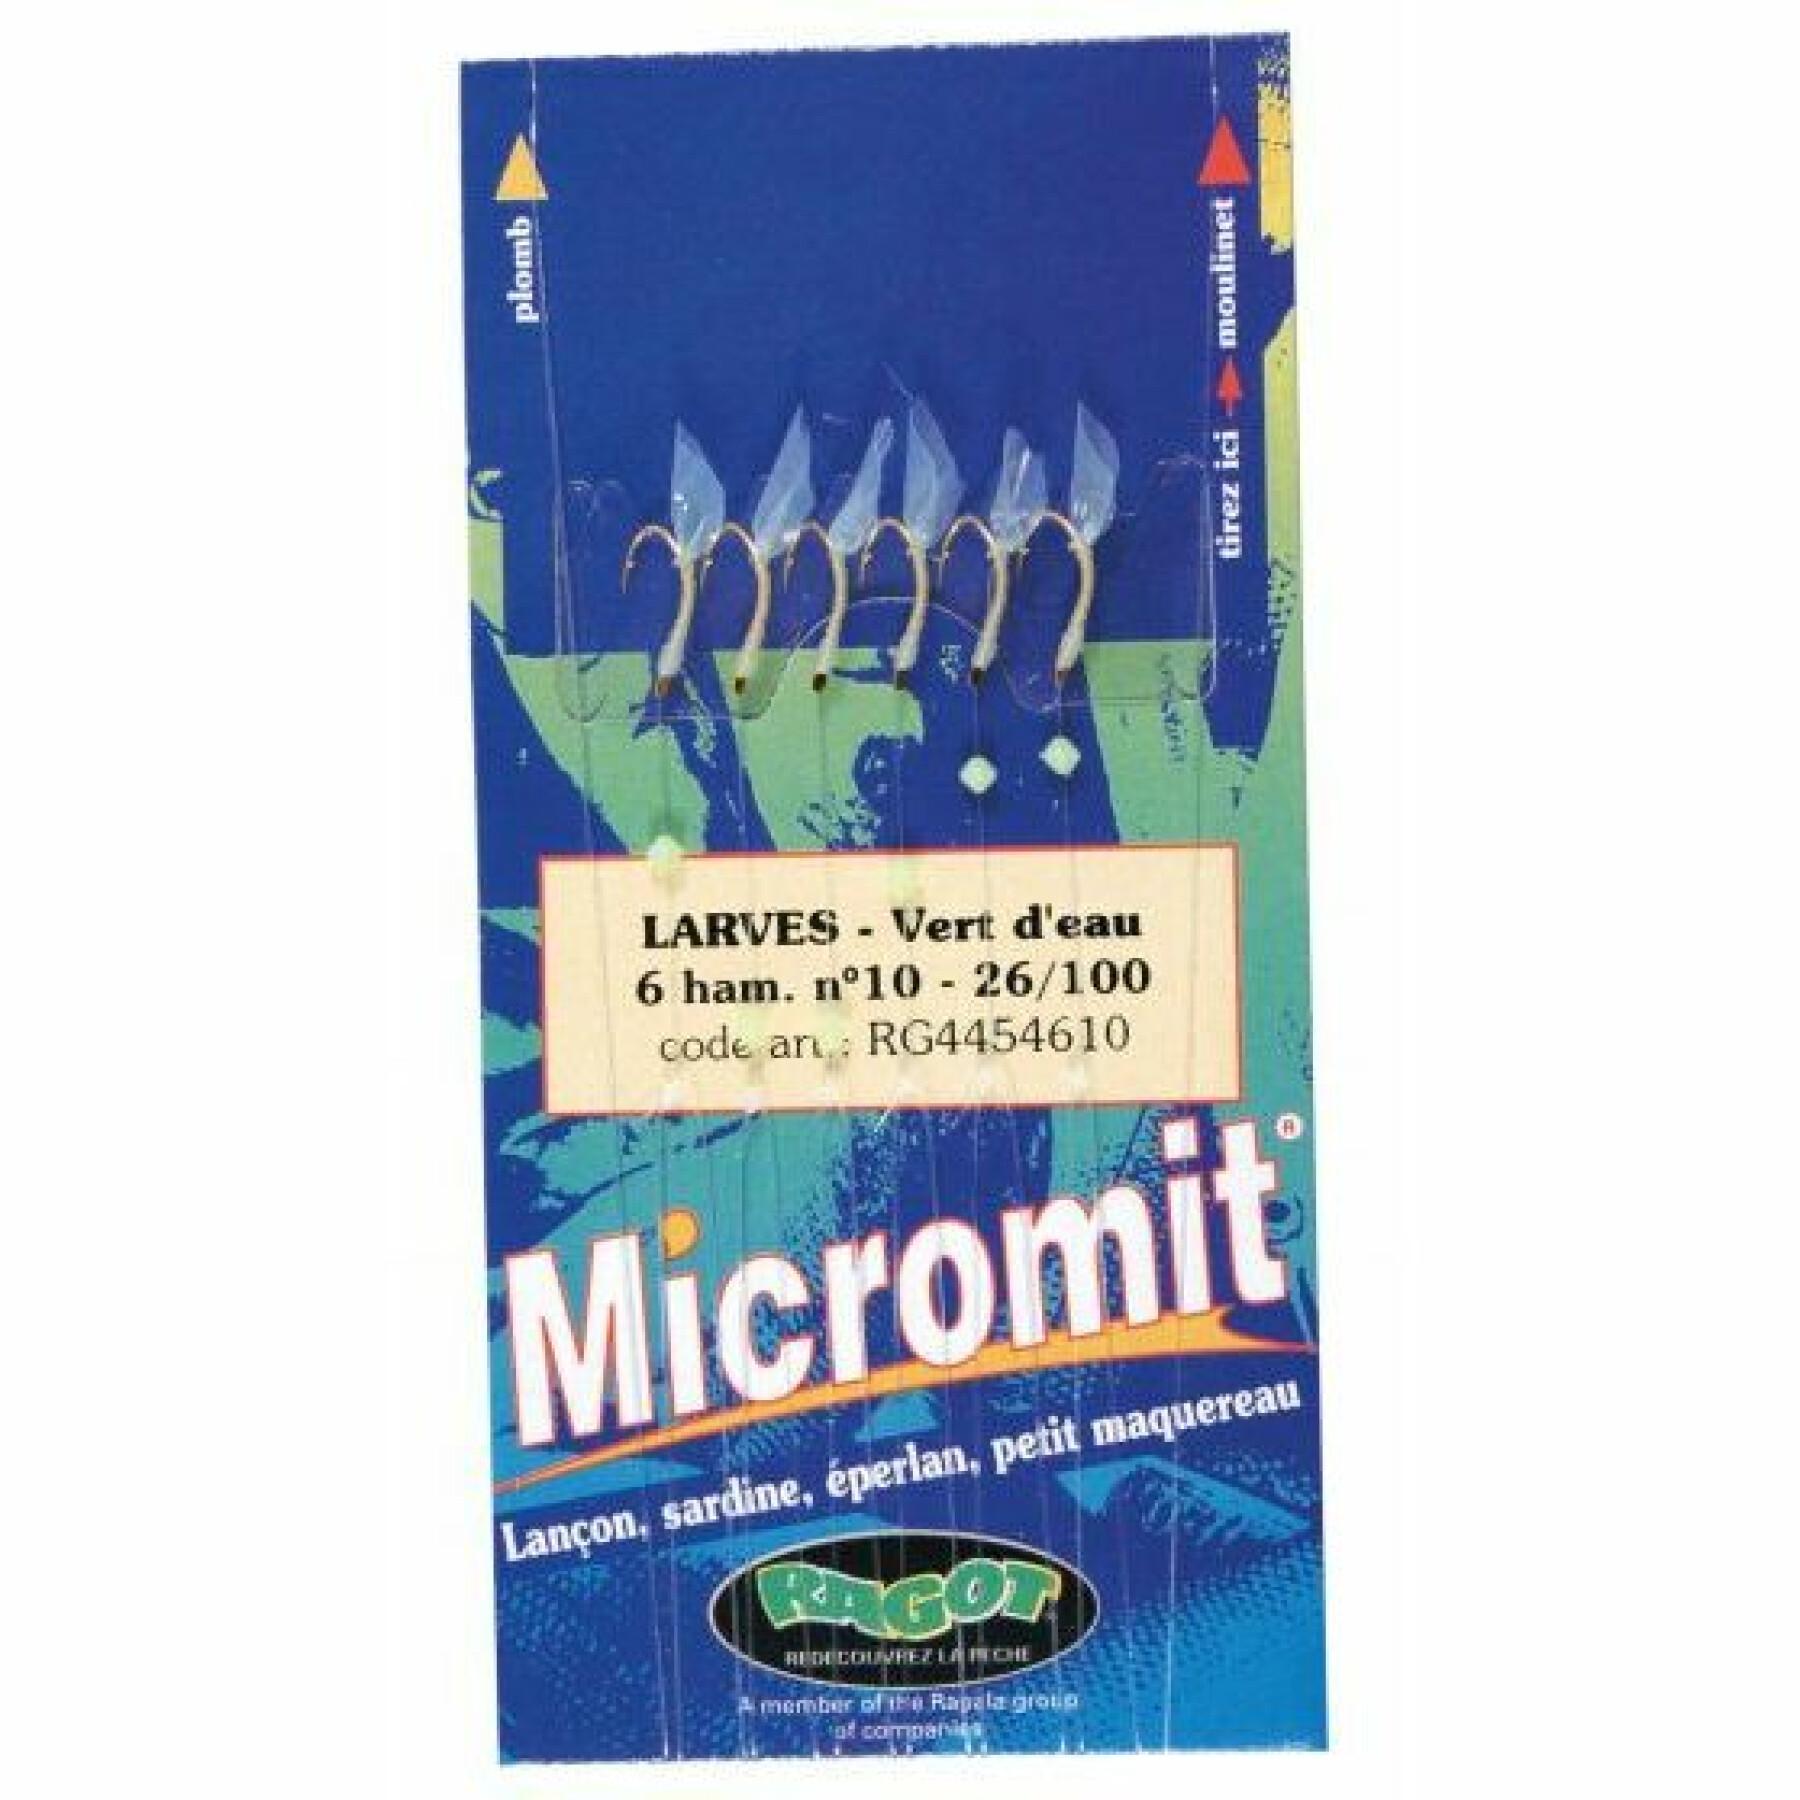 Iscas para larvas Ragot micromit (x5)